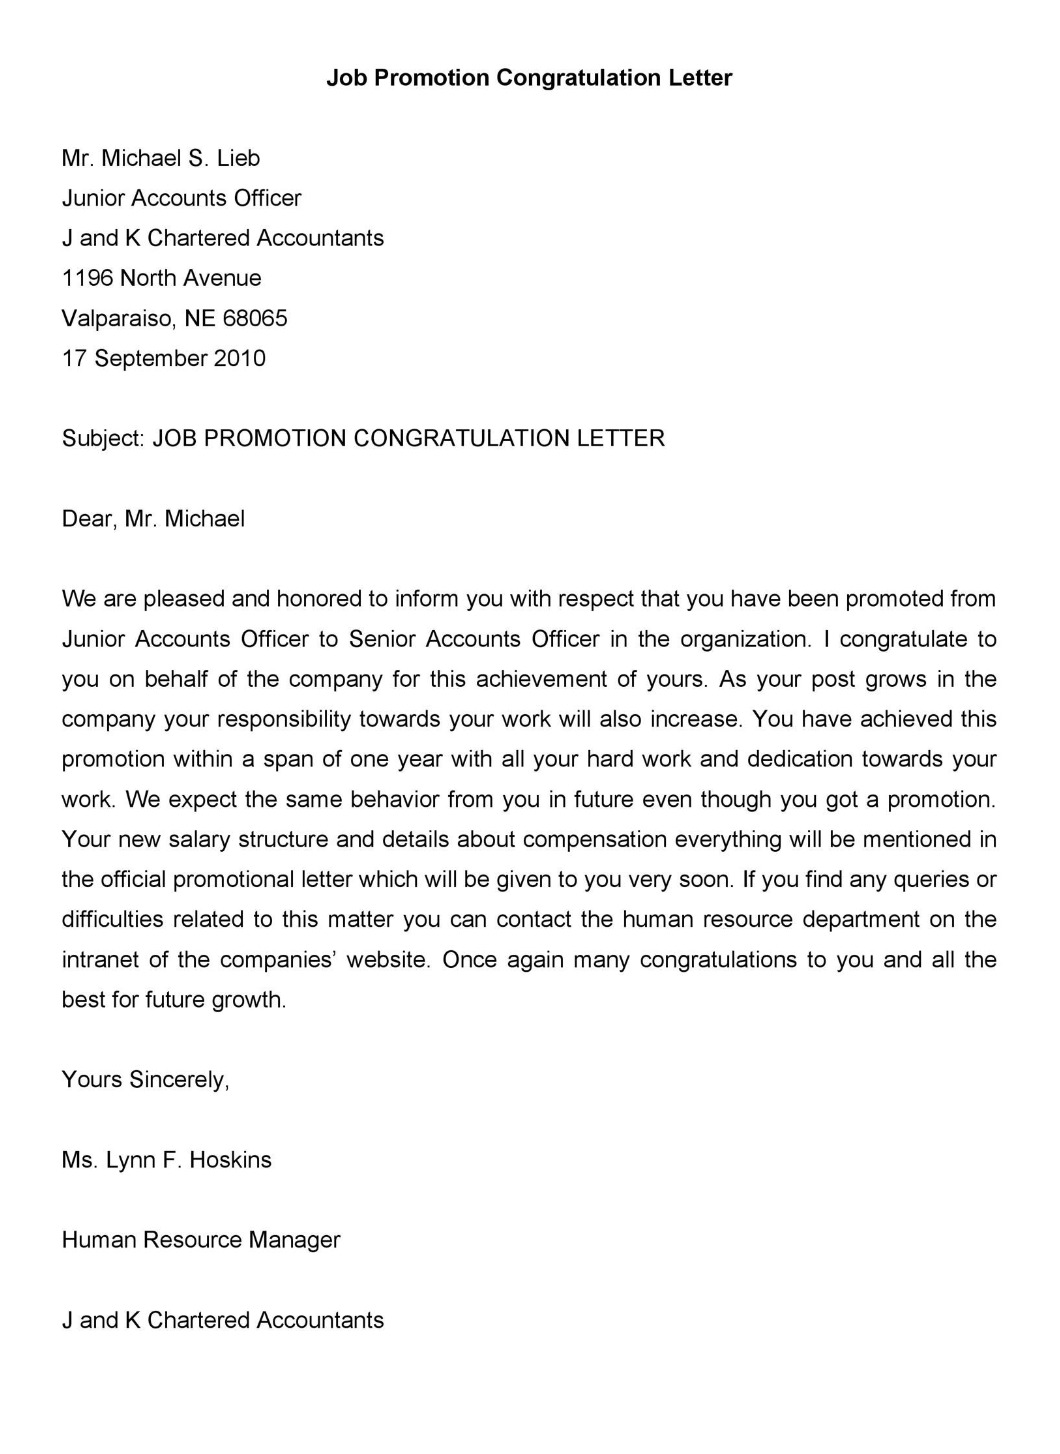 job promotion congratulation letter sample